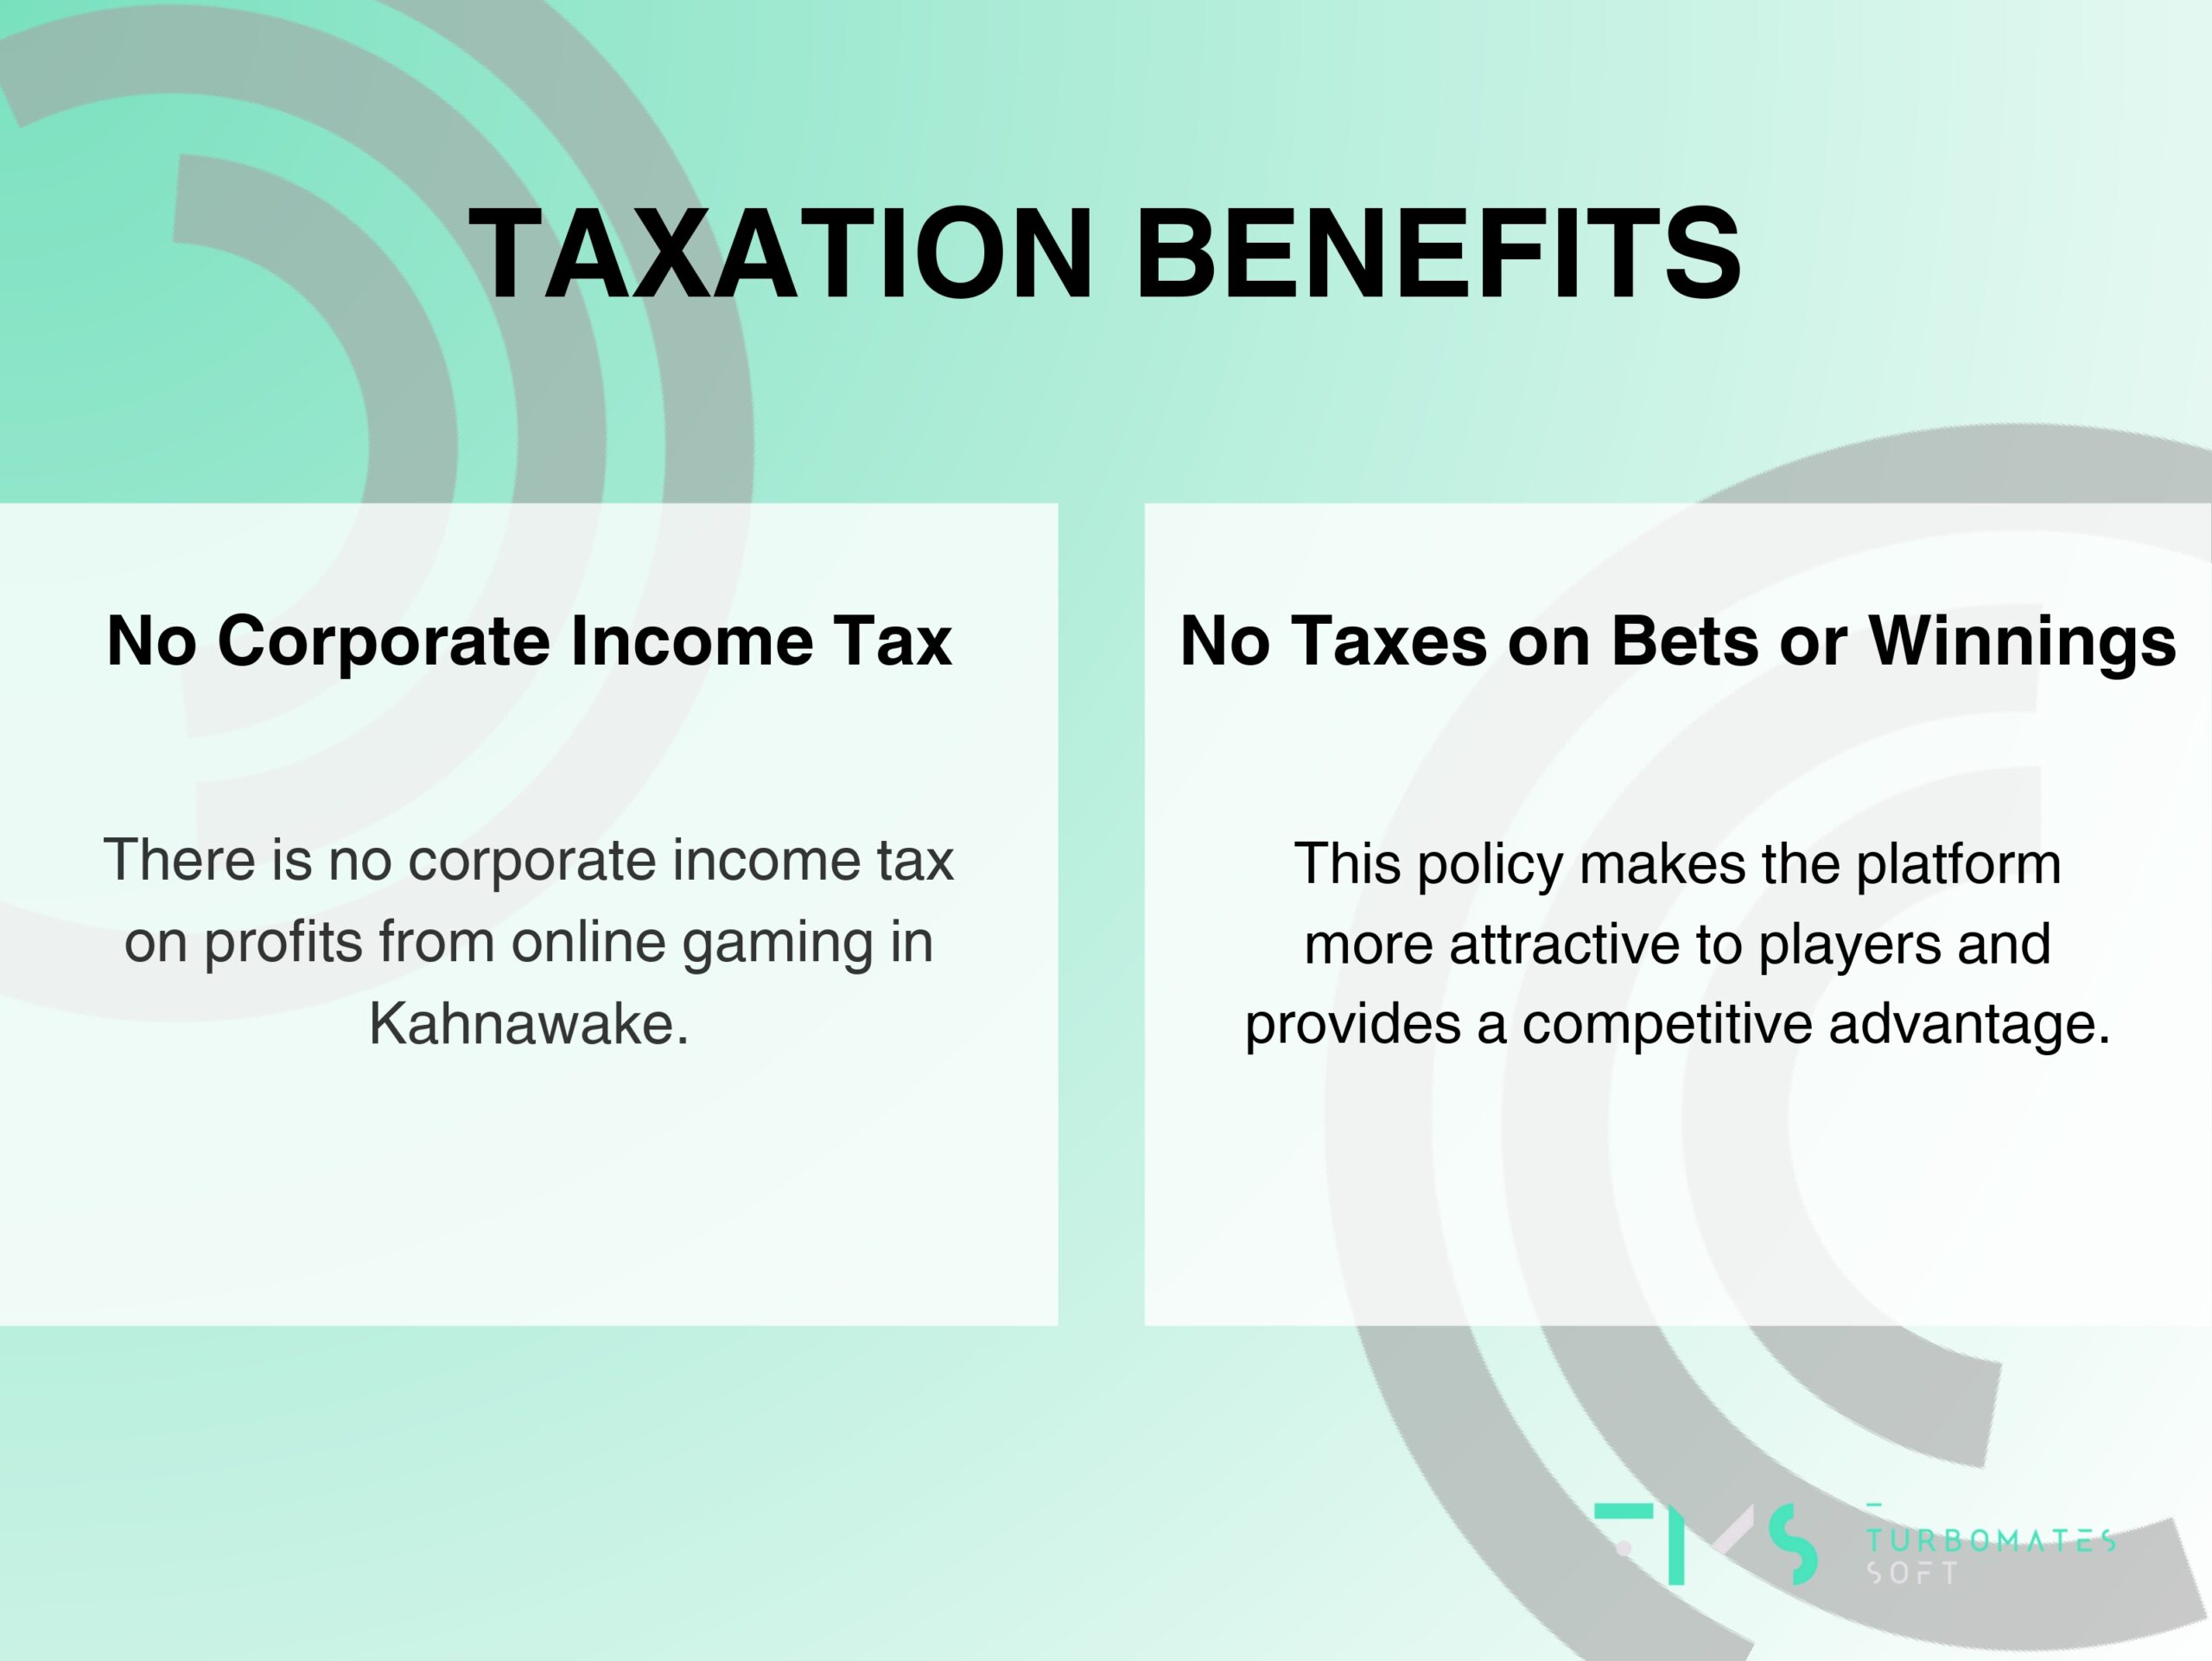 Taxation Benefits: